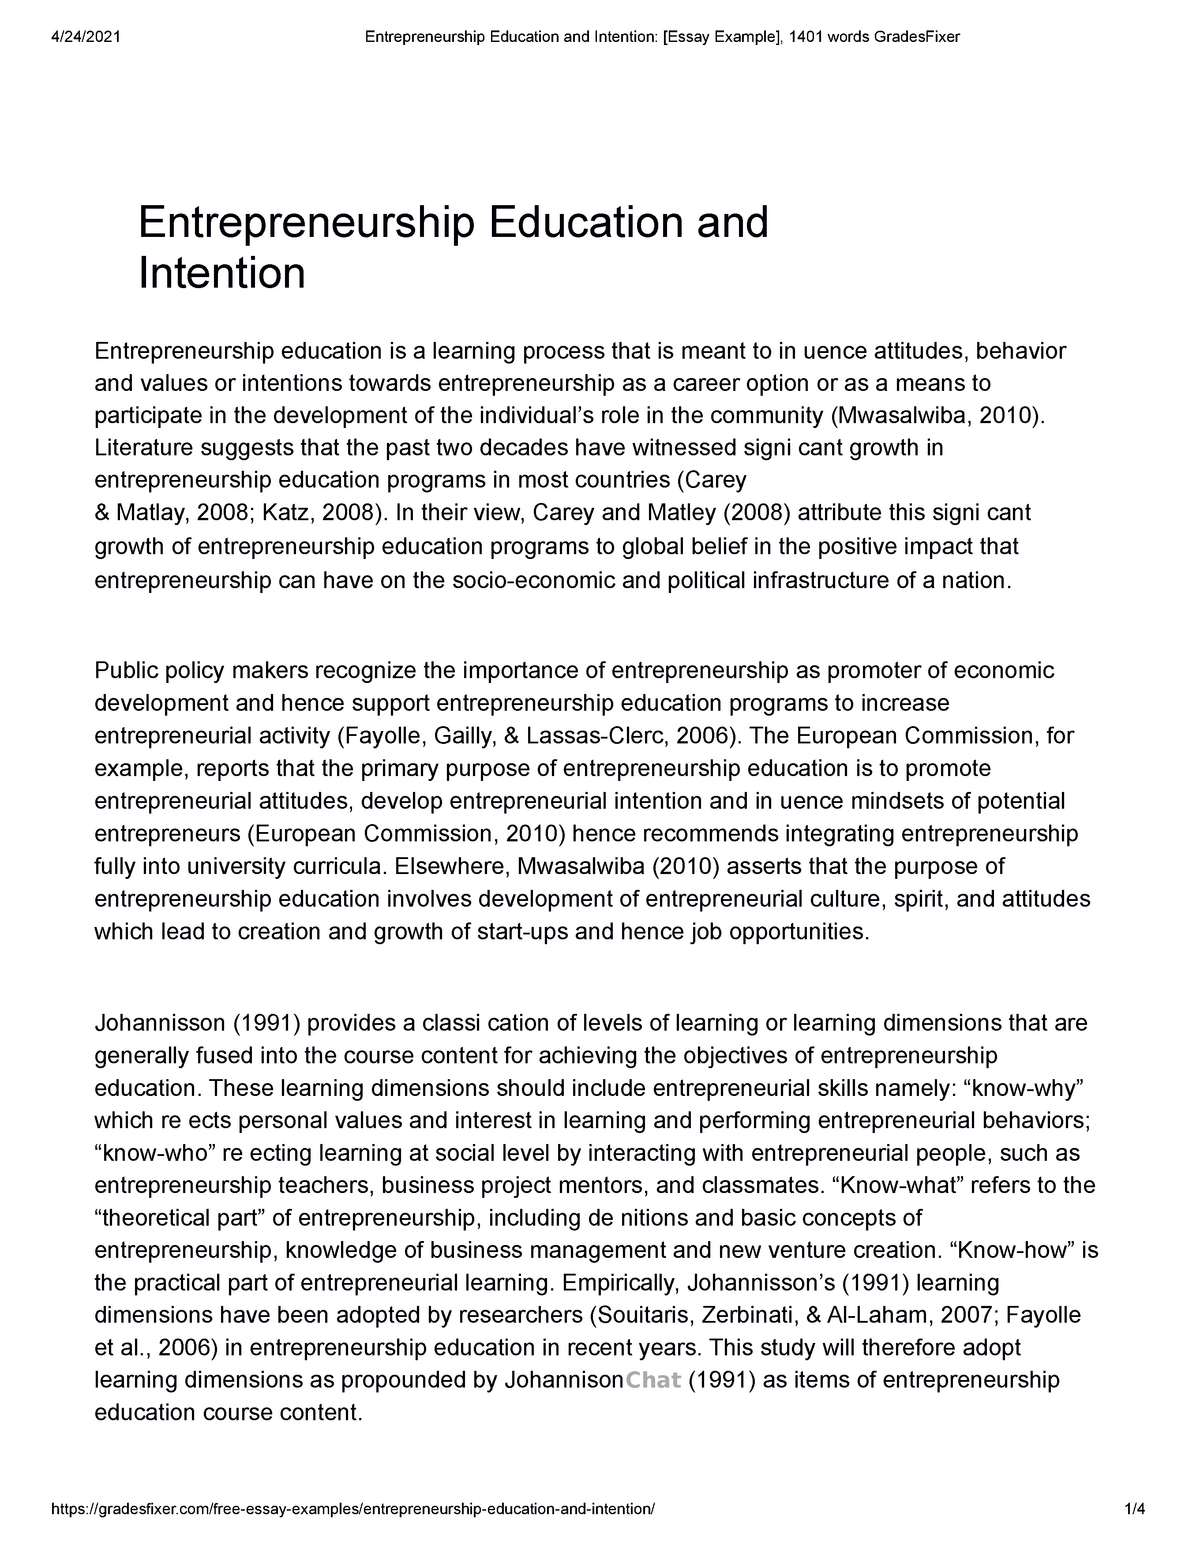 entrepreneurship as a career option essay